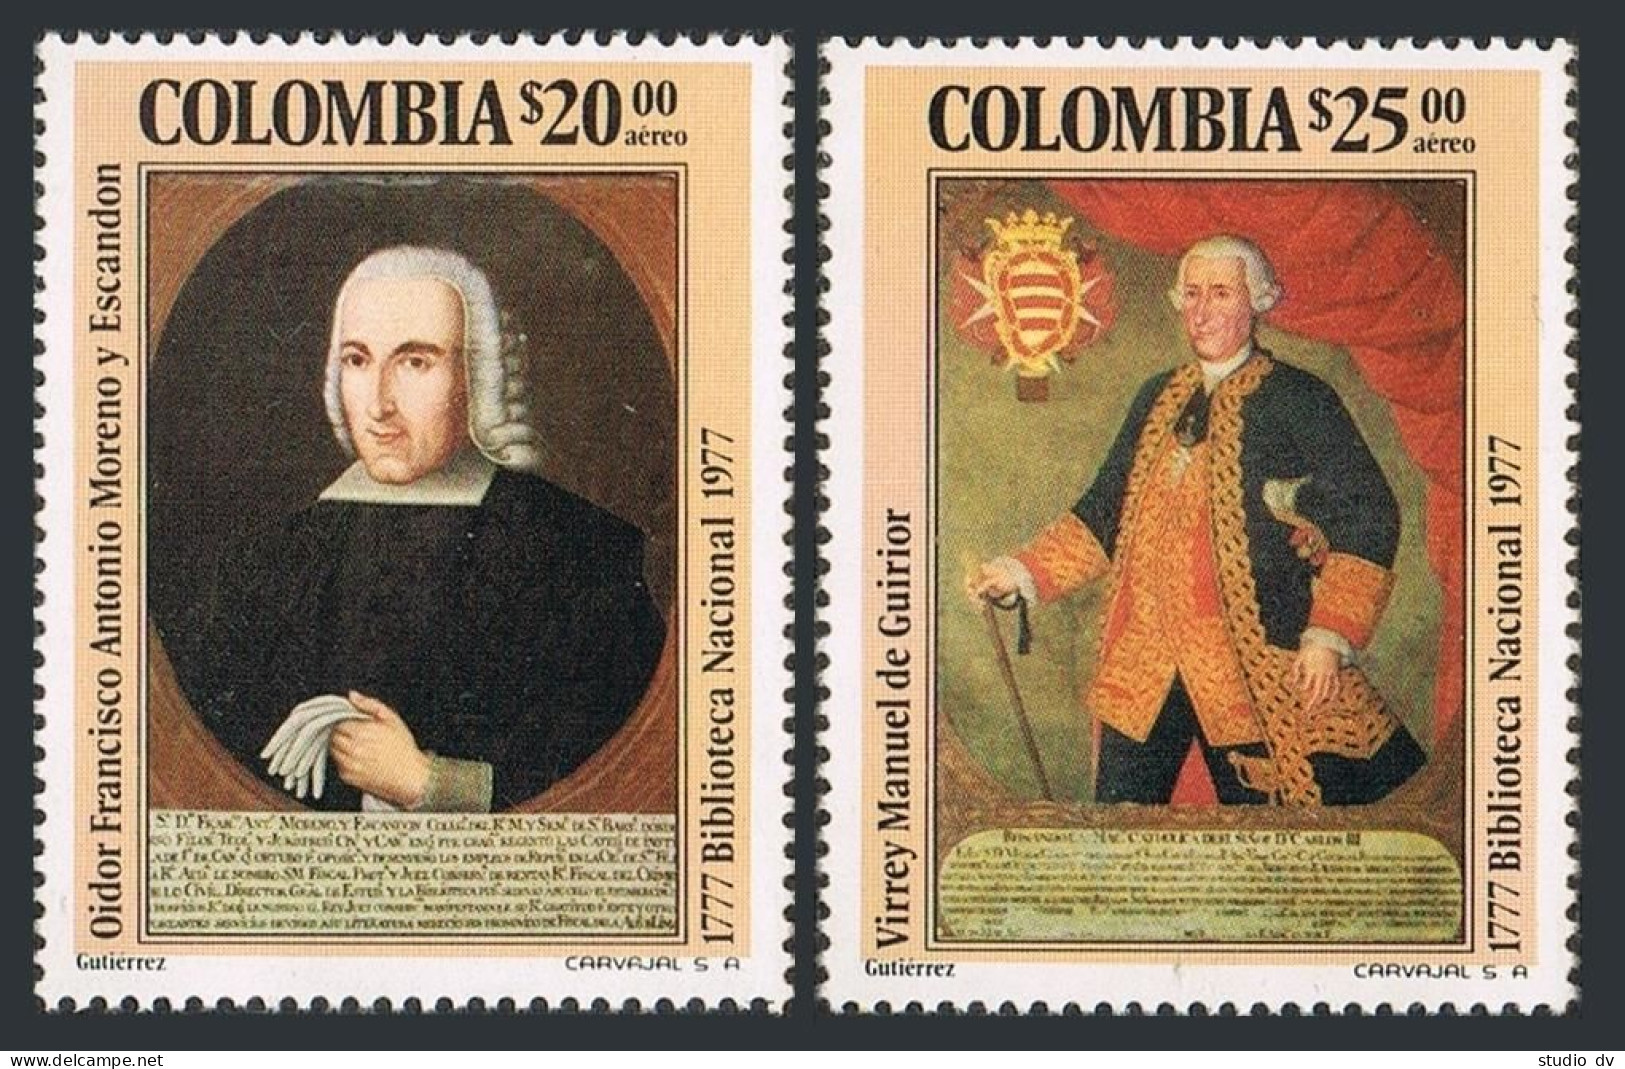 Colombia C651-C652, MNH. National Library-200, 1977. F.A.Moreno, M.de Guirior. - Colombia